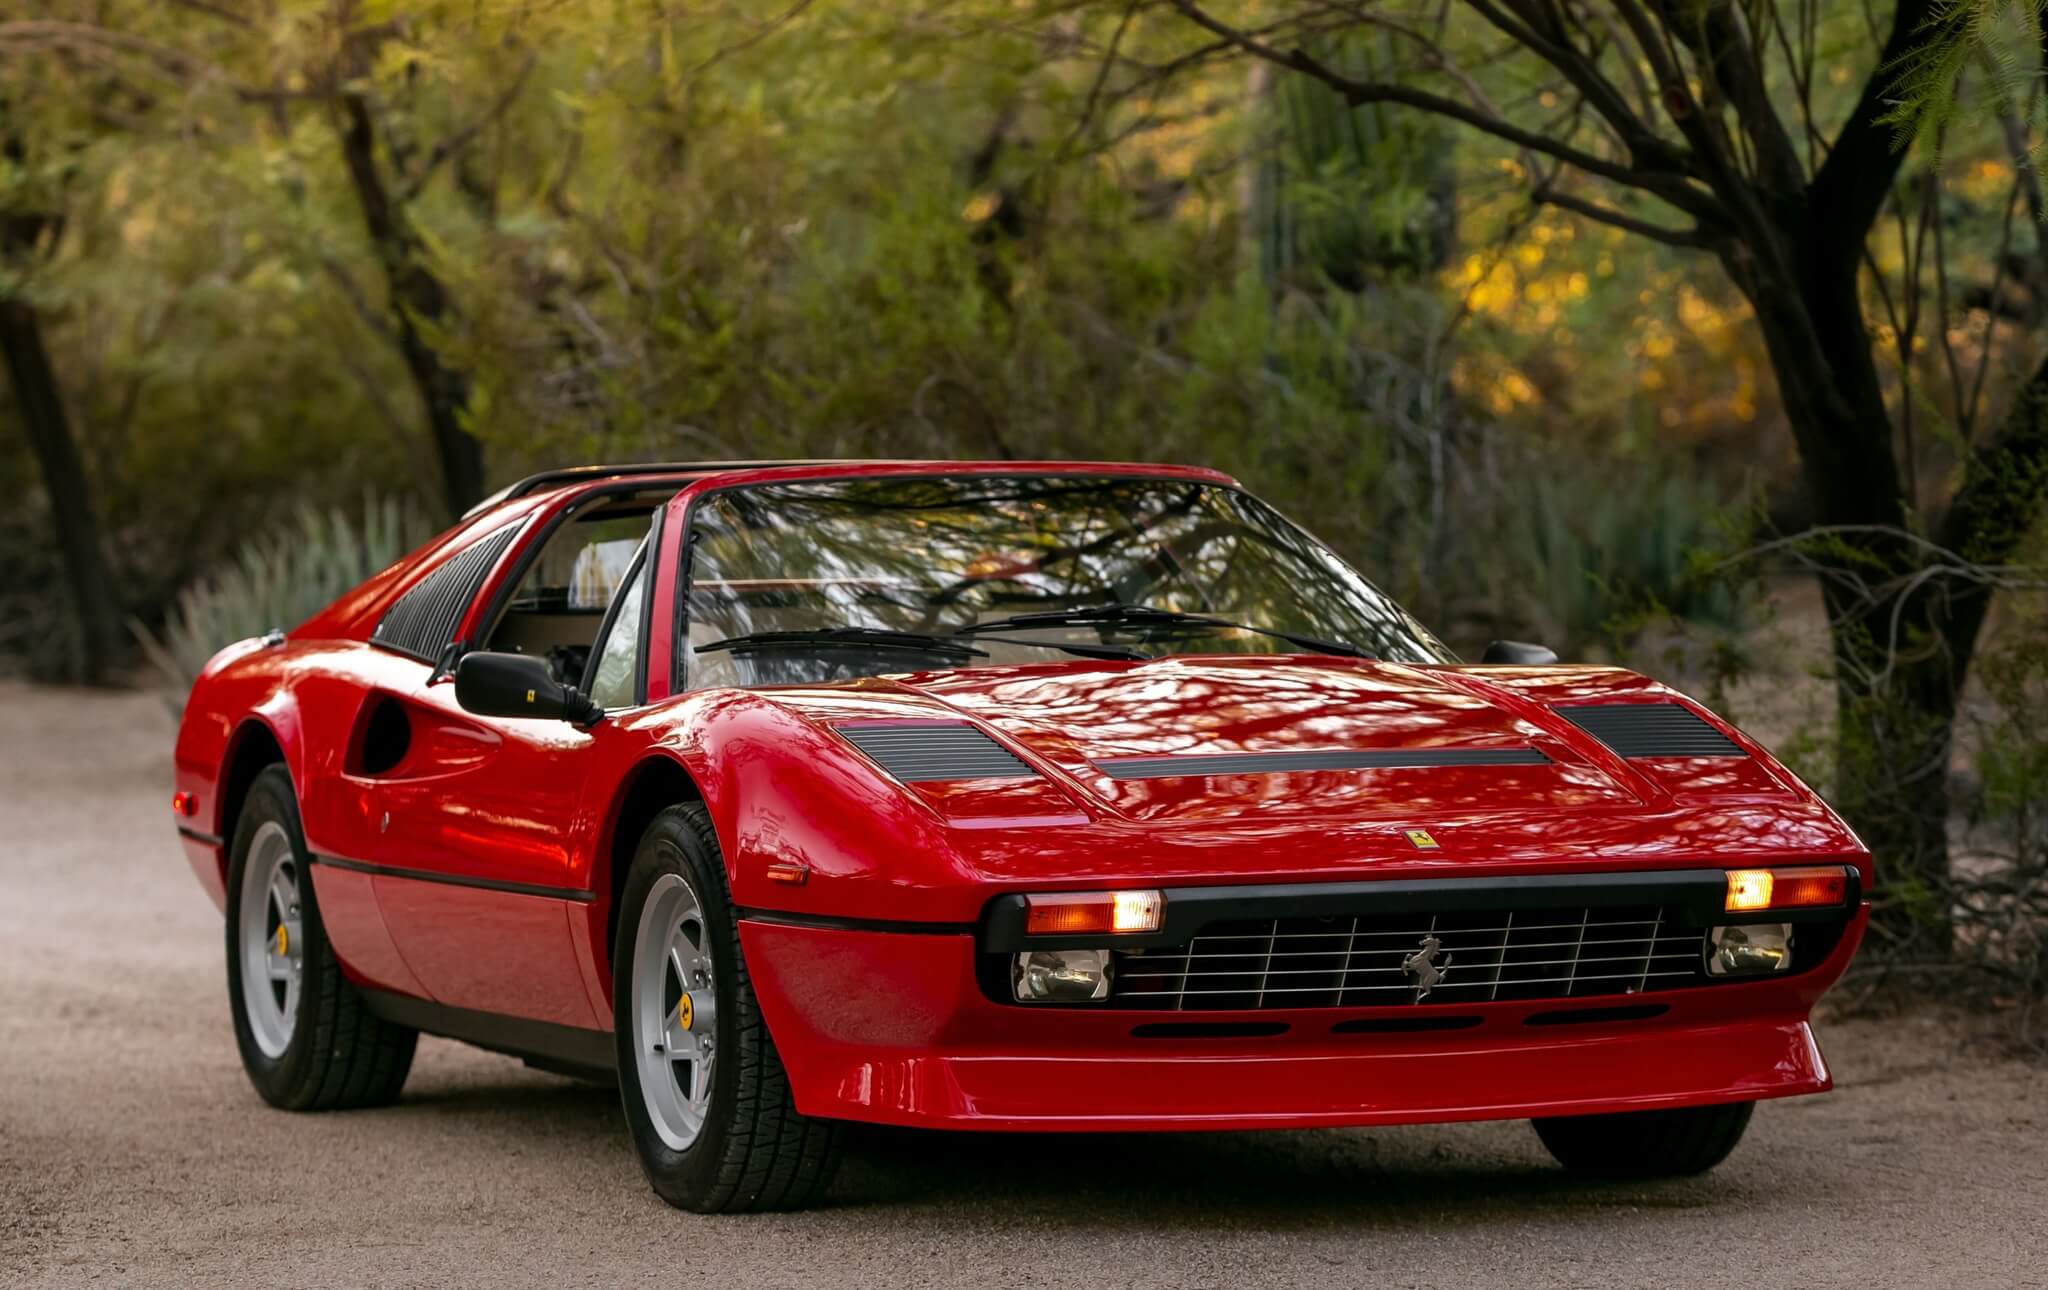 Ferrari 308 Gts Wallpapers